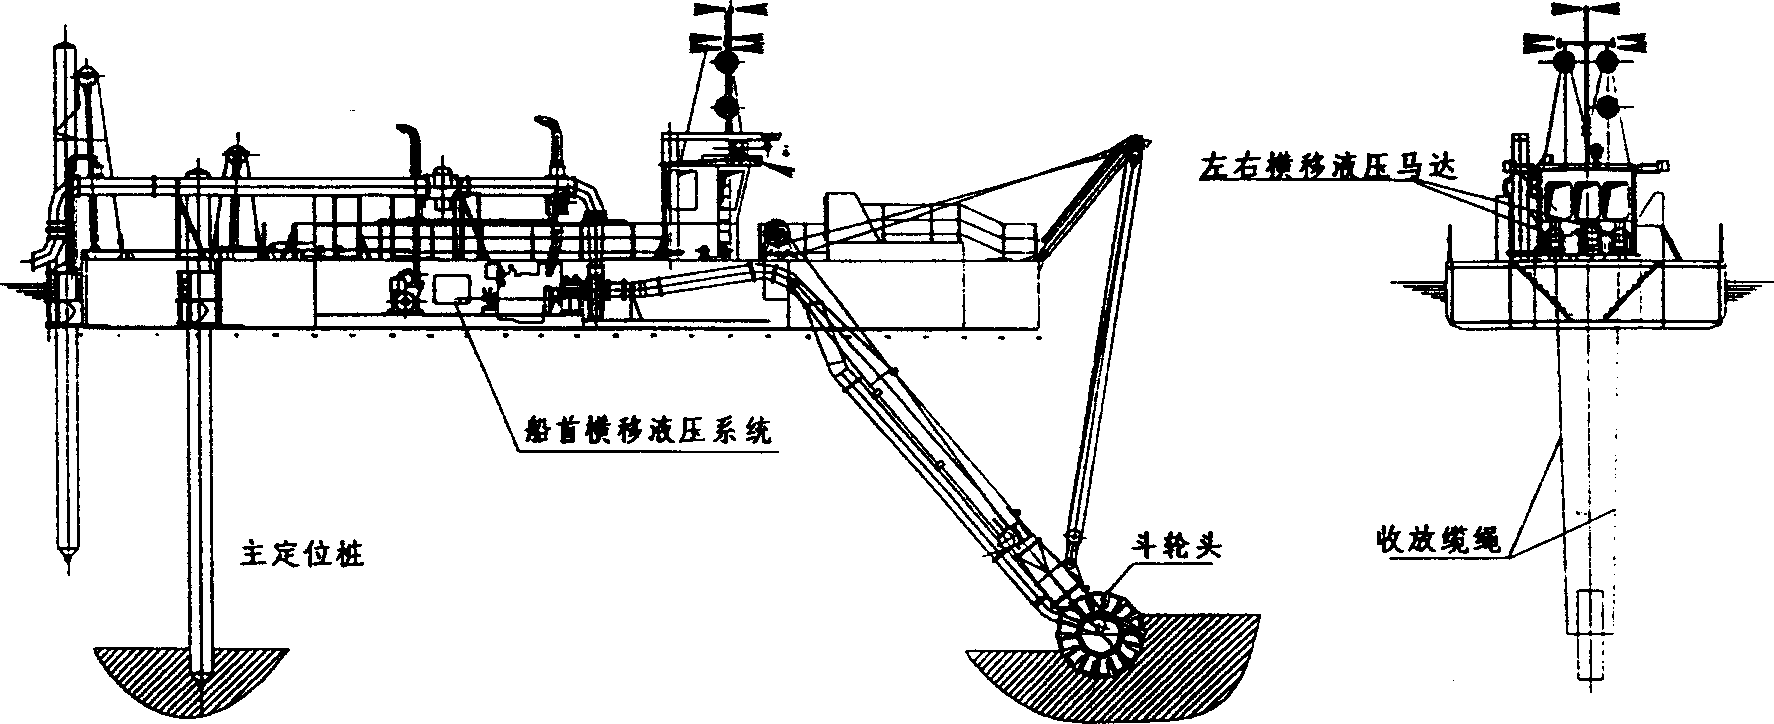 Transverse hydraulic control system on dredge boat stem